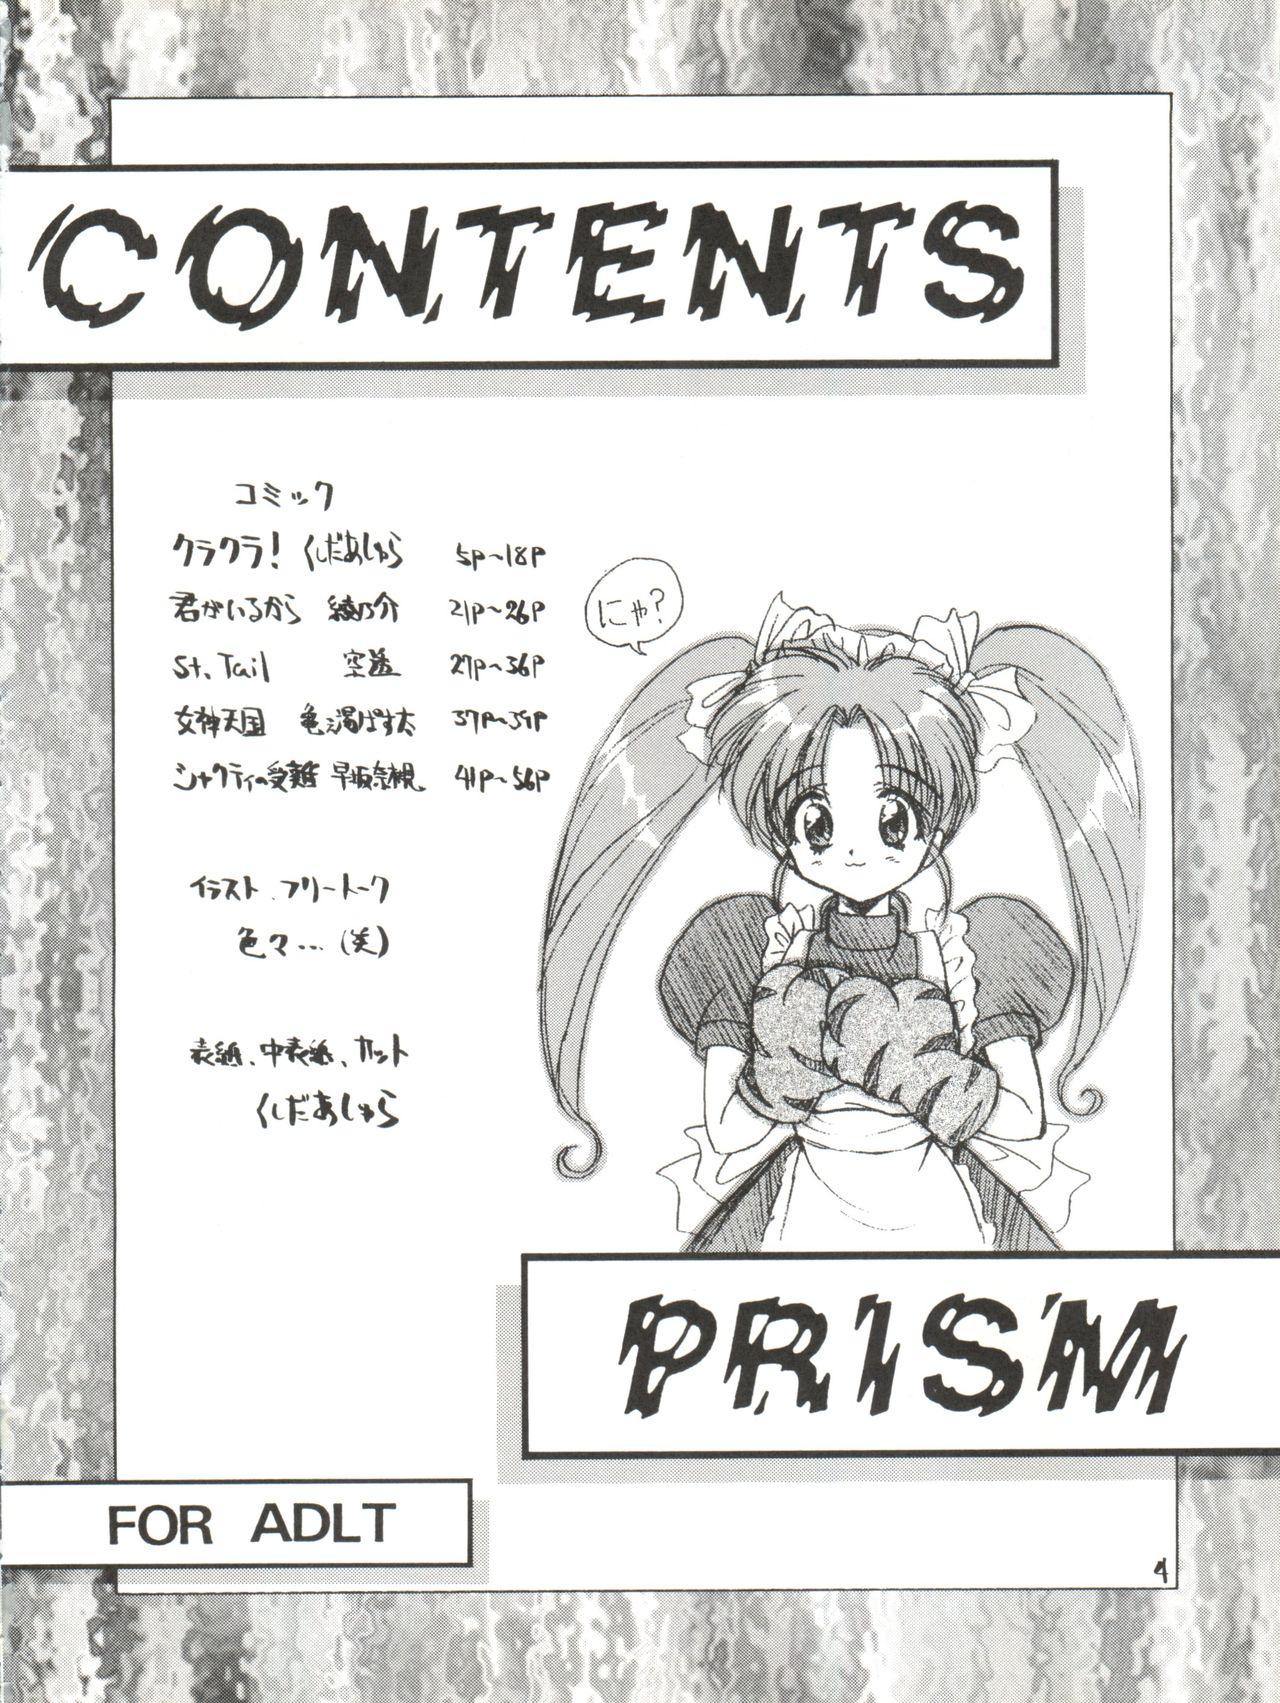 Teasing PRISM - Tokimeki memorial Saint tail Wedding peach Victory gundam Megami paradise Ex Girlfriends - Page 4